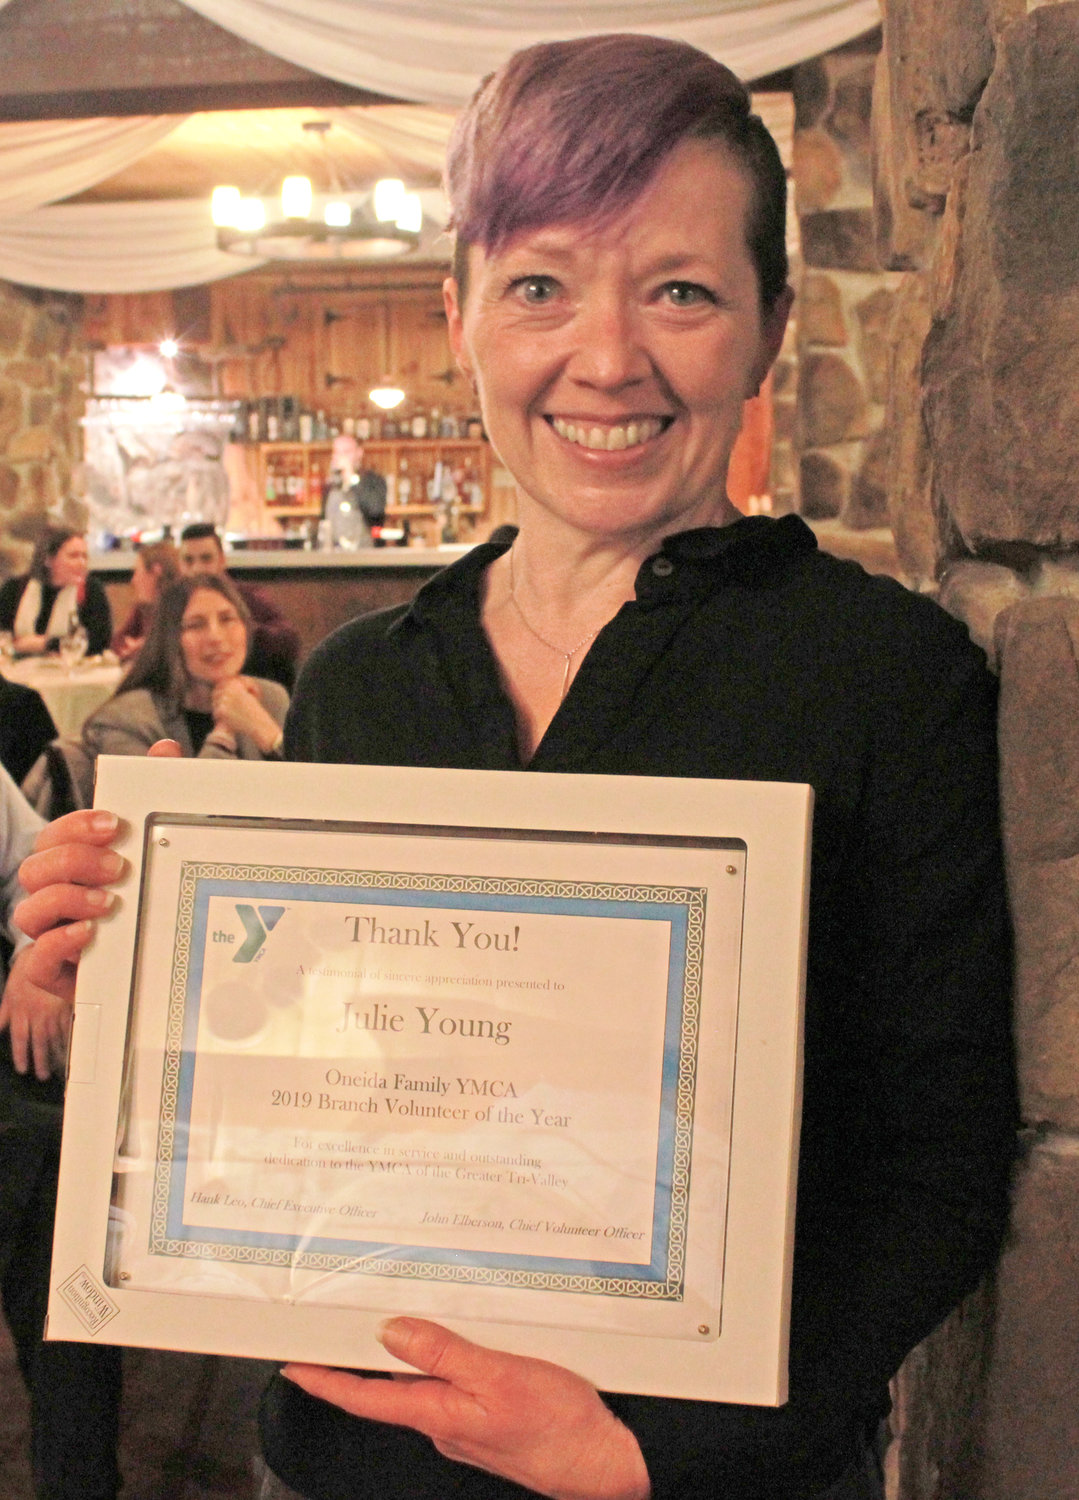 ONEIDA VOLUNTEER — Julie Young was awarded the Oneida Volunteer of the Year at the annual YMCA 2020 Recognition Program on Wednesday.